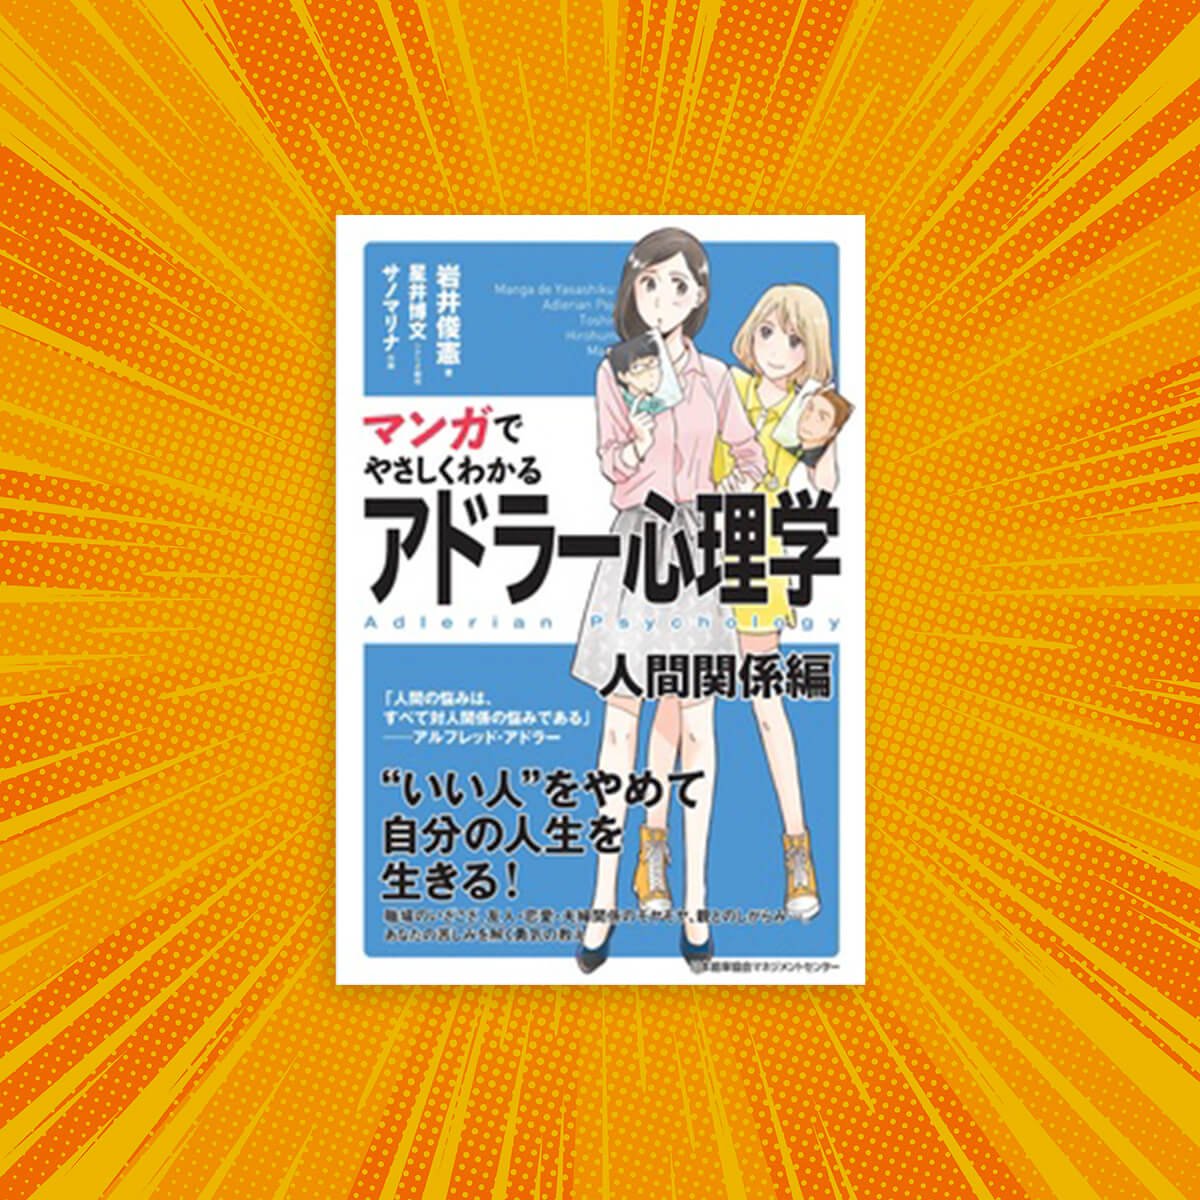 Easy reading through Manga | Individual psychology by Adler Human relationships